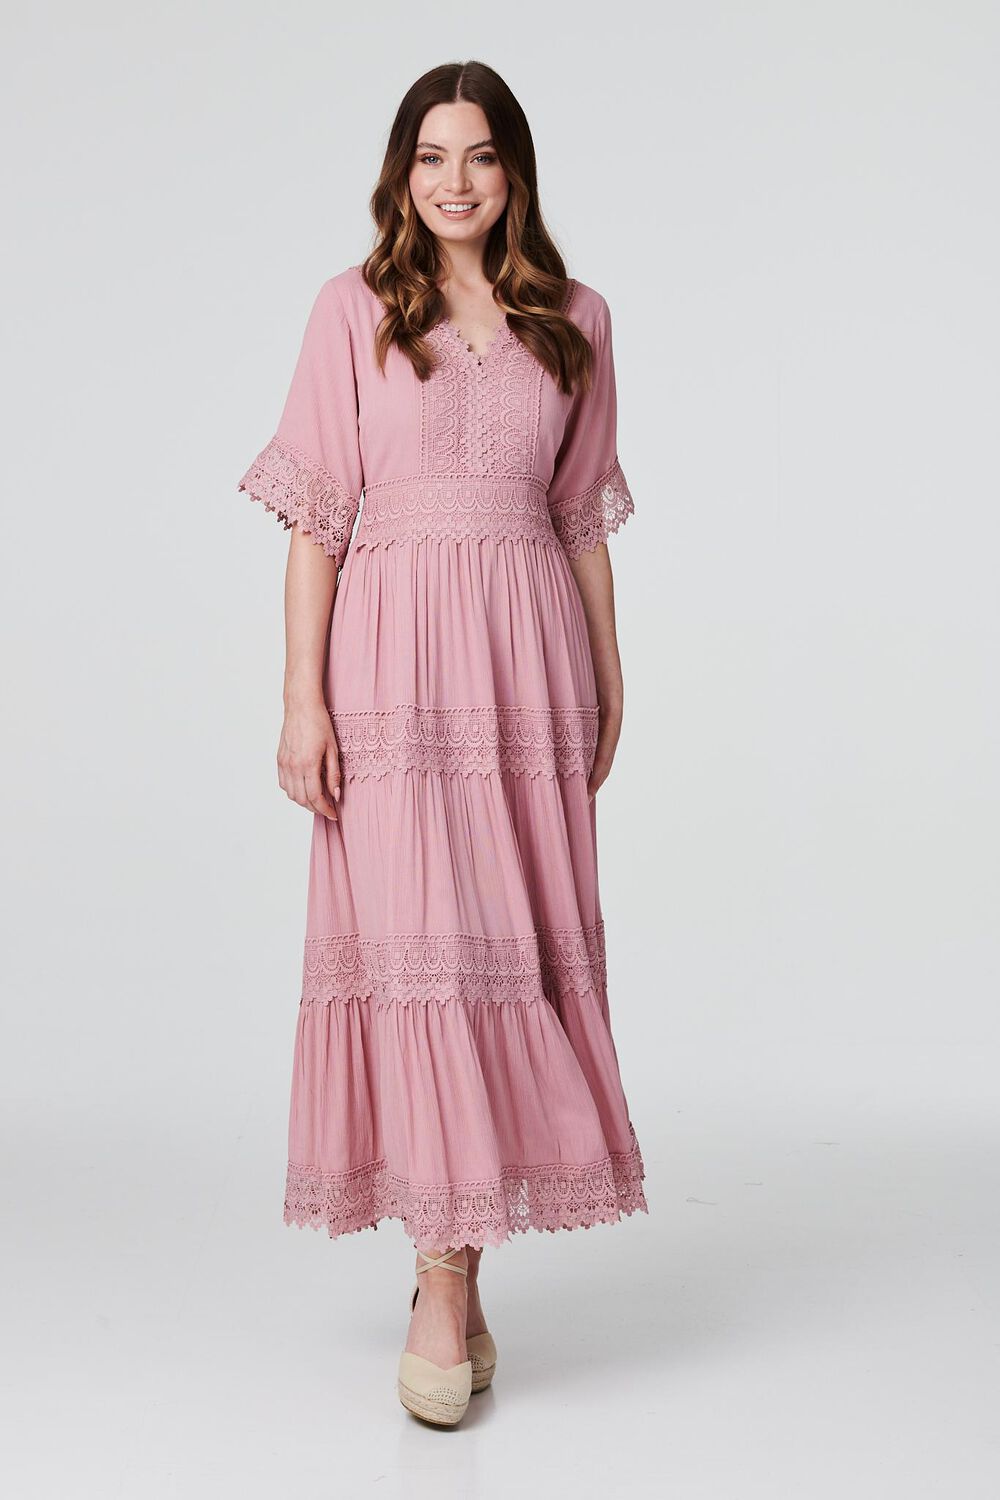 Izabel London Pink - Short Sleeve Crochet Maxi Dress, Size: 16